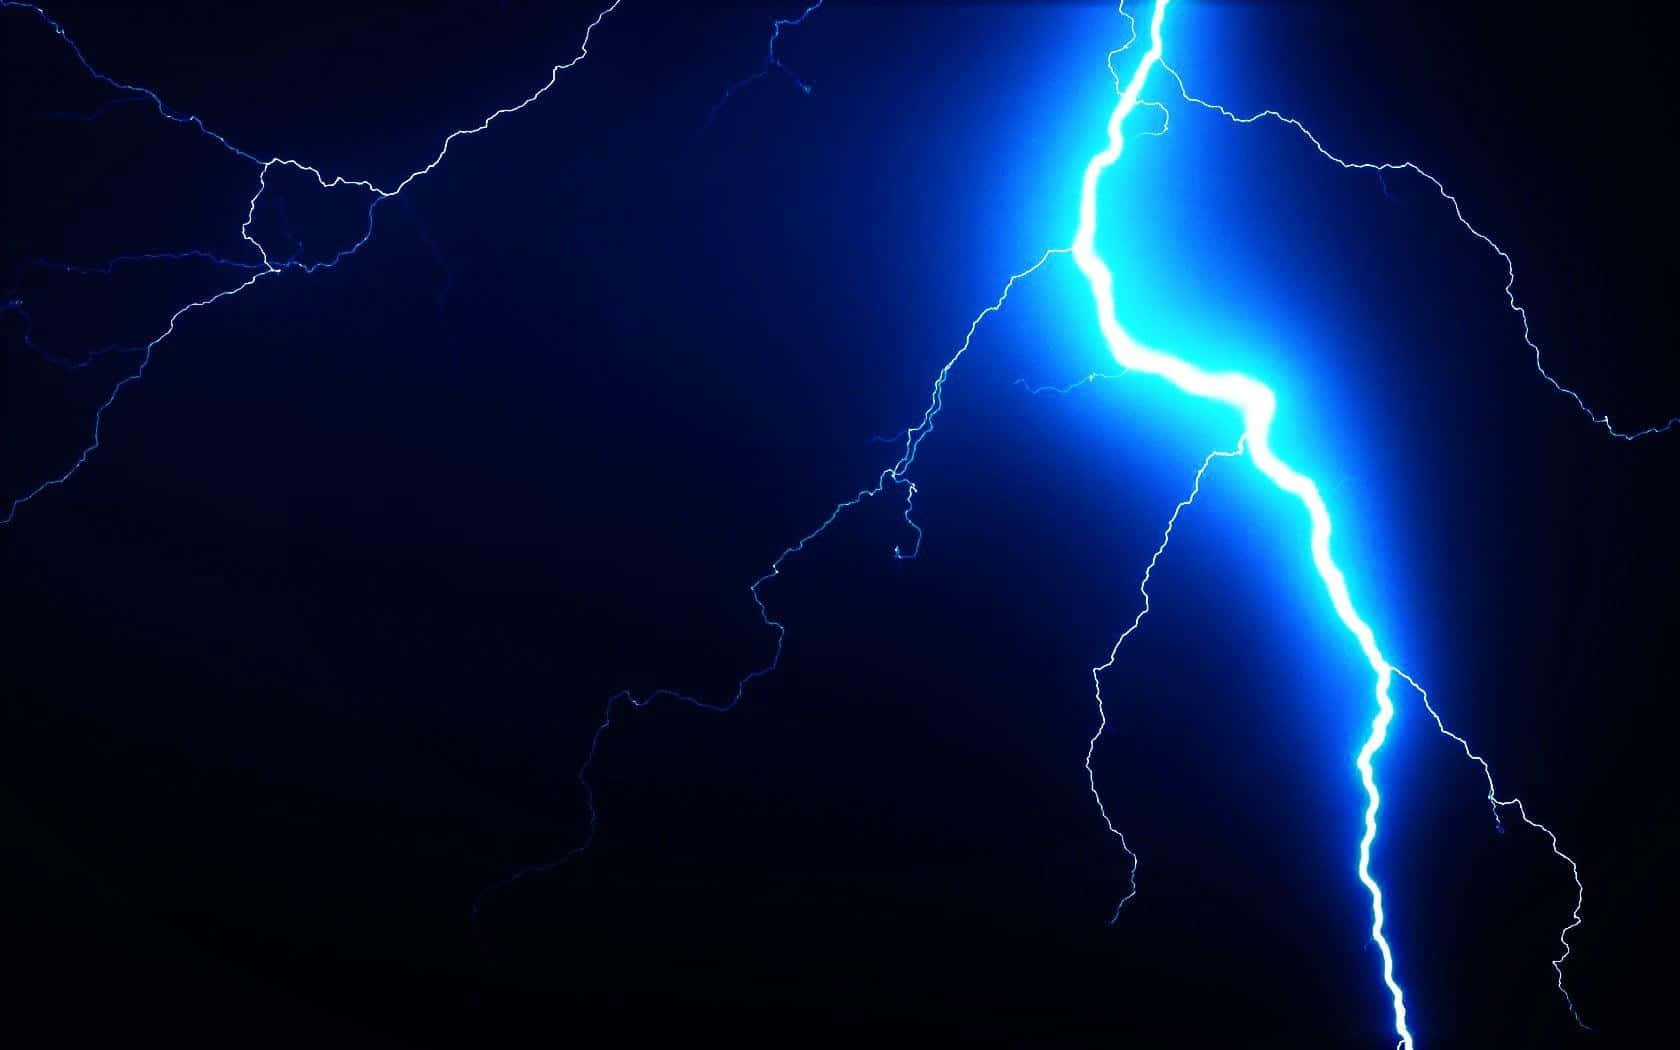 A Brilliant Display of Blue Lightning